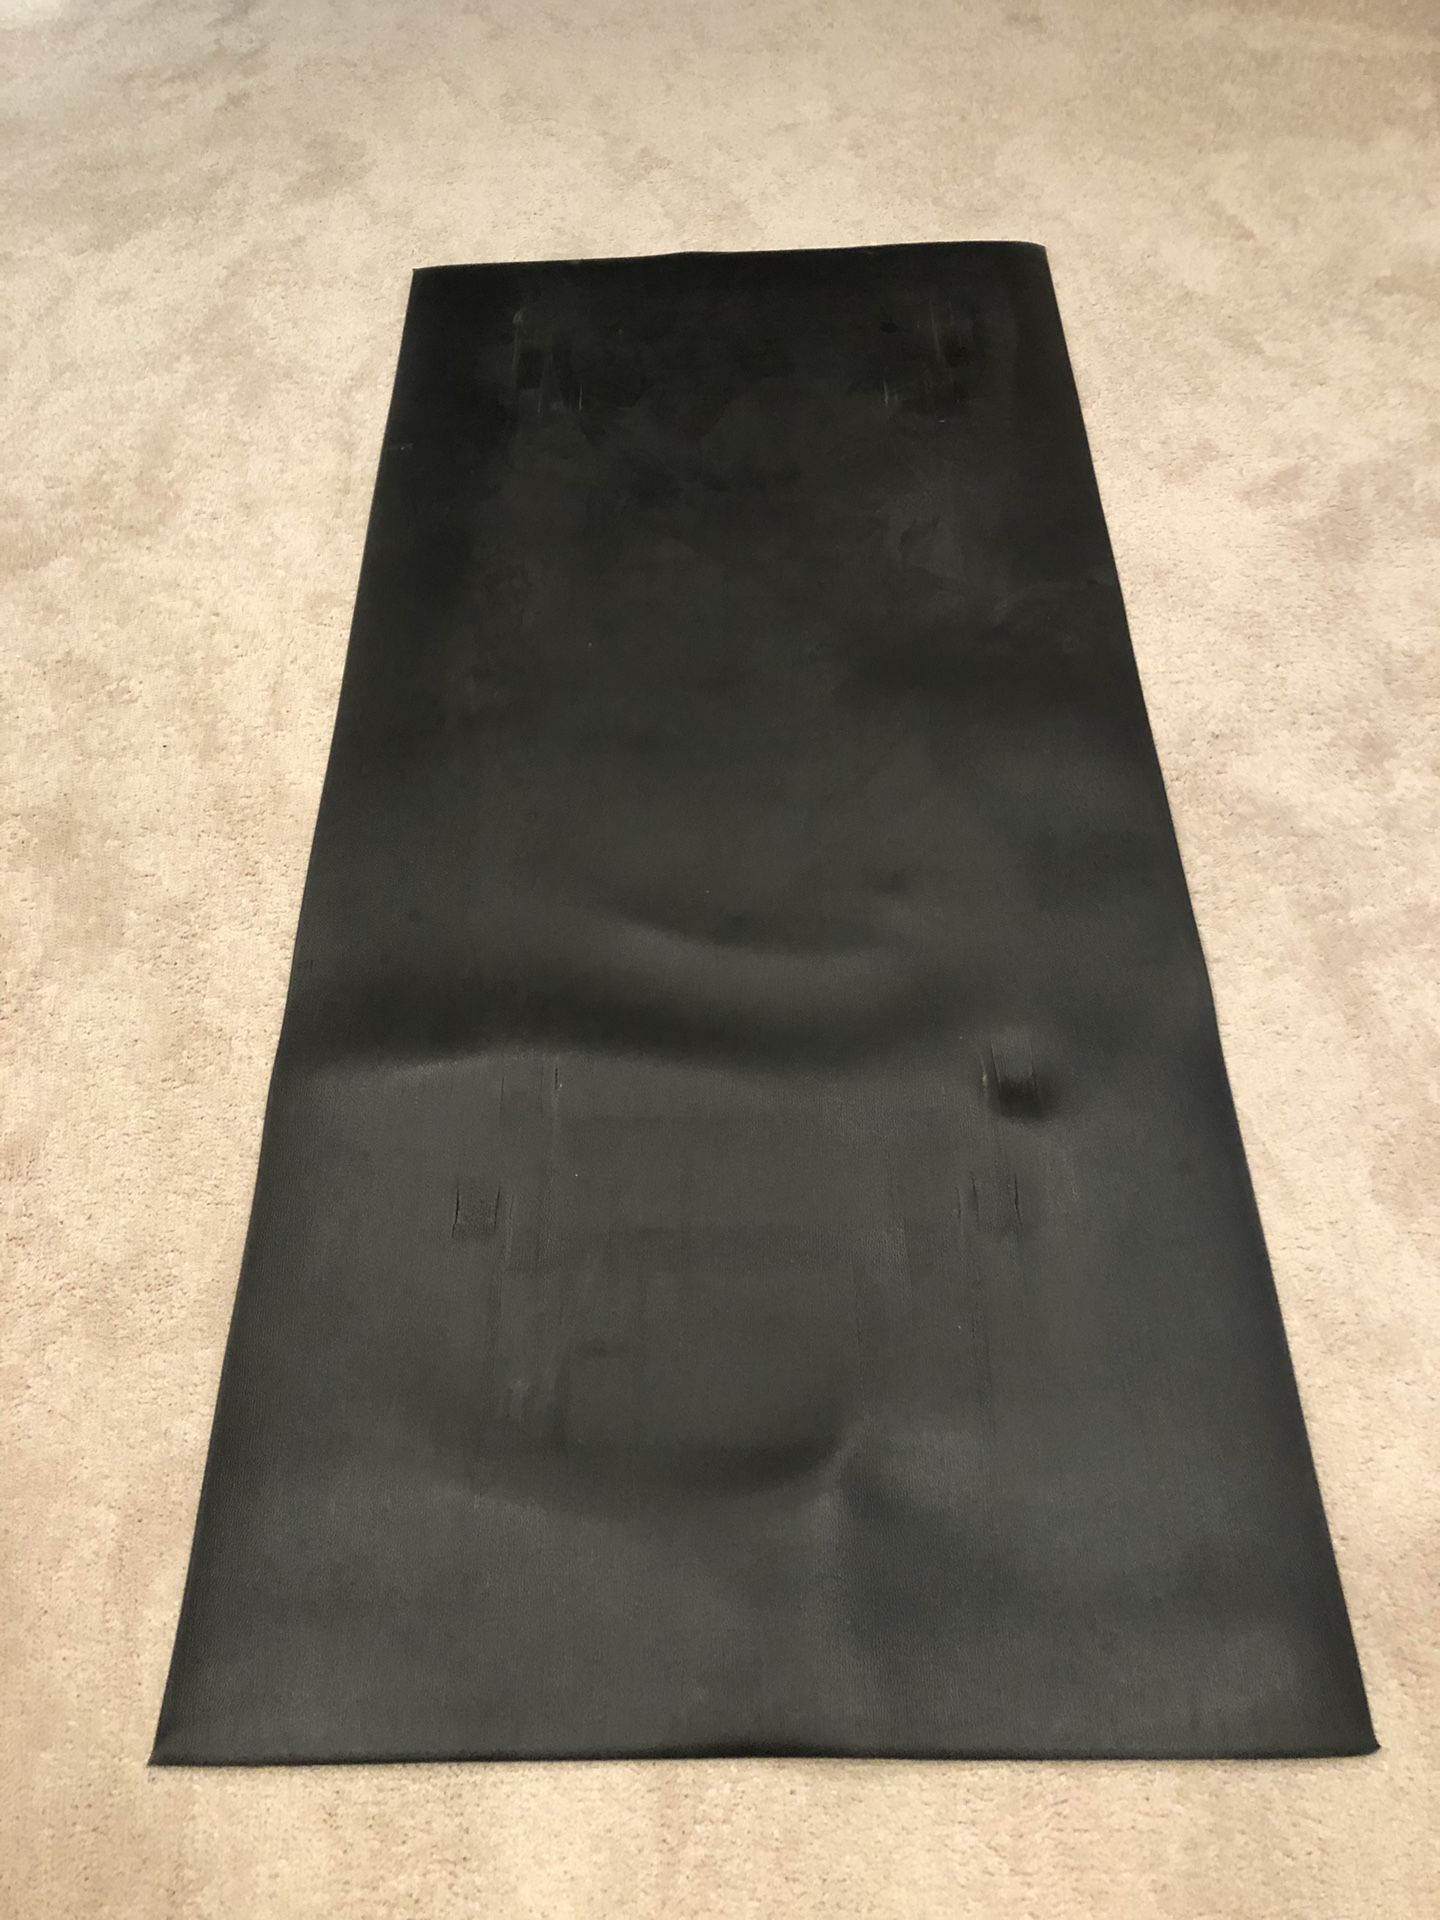 Exercise machine mats